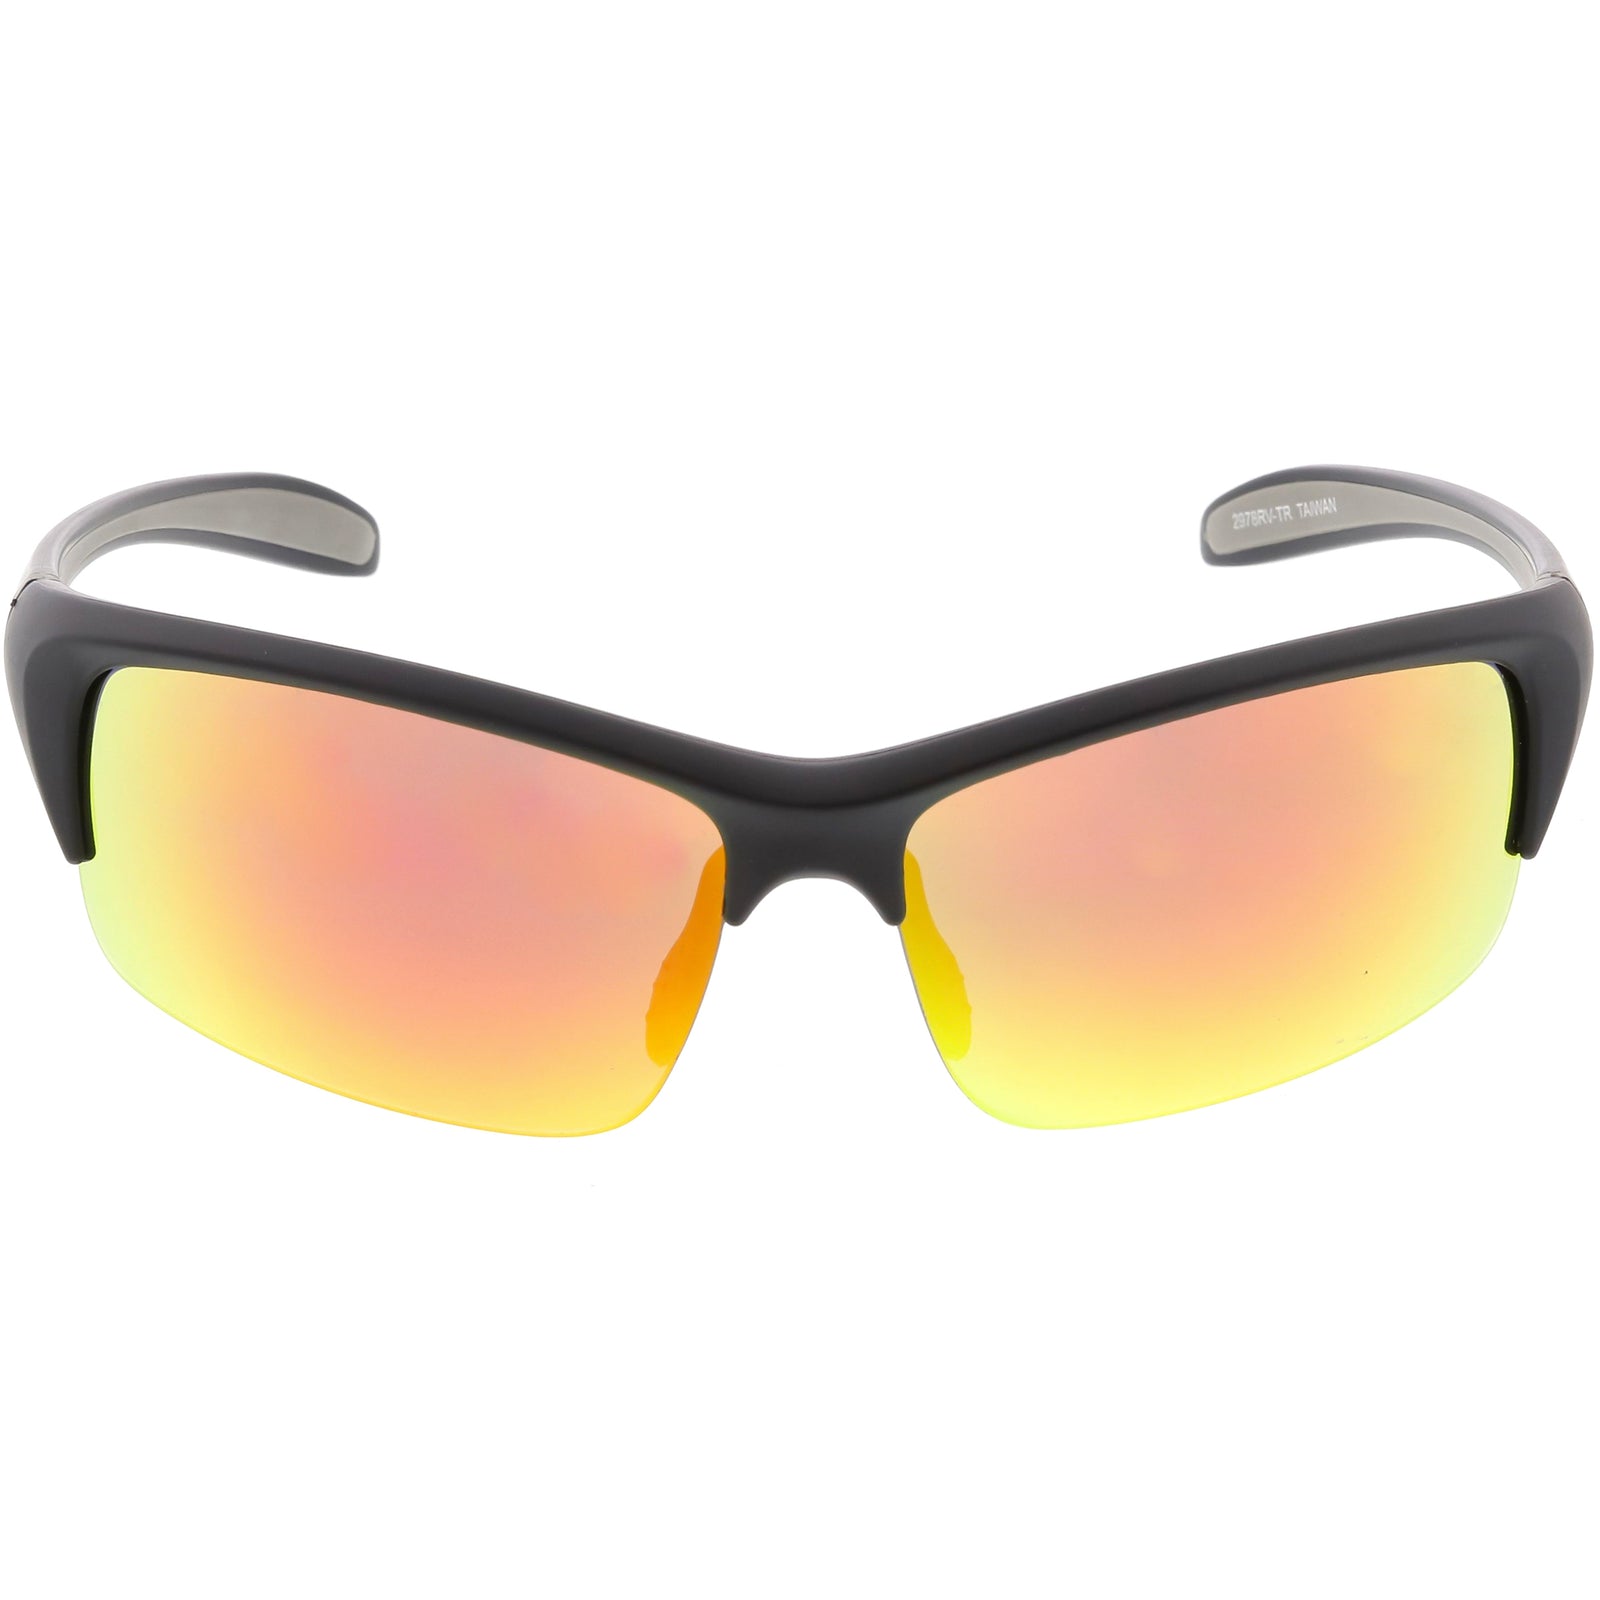 TR-90 Sports Sunglasses for Men